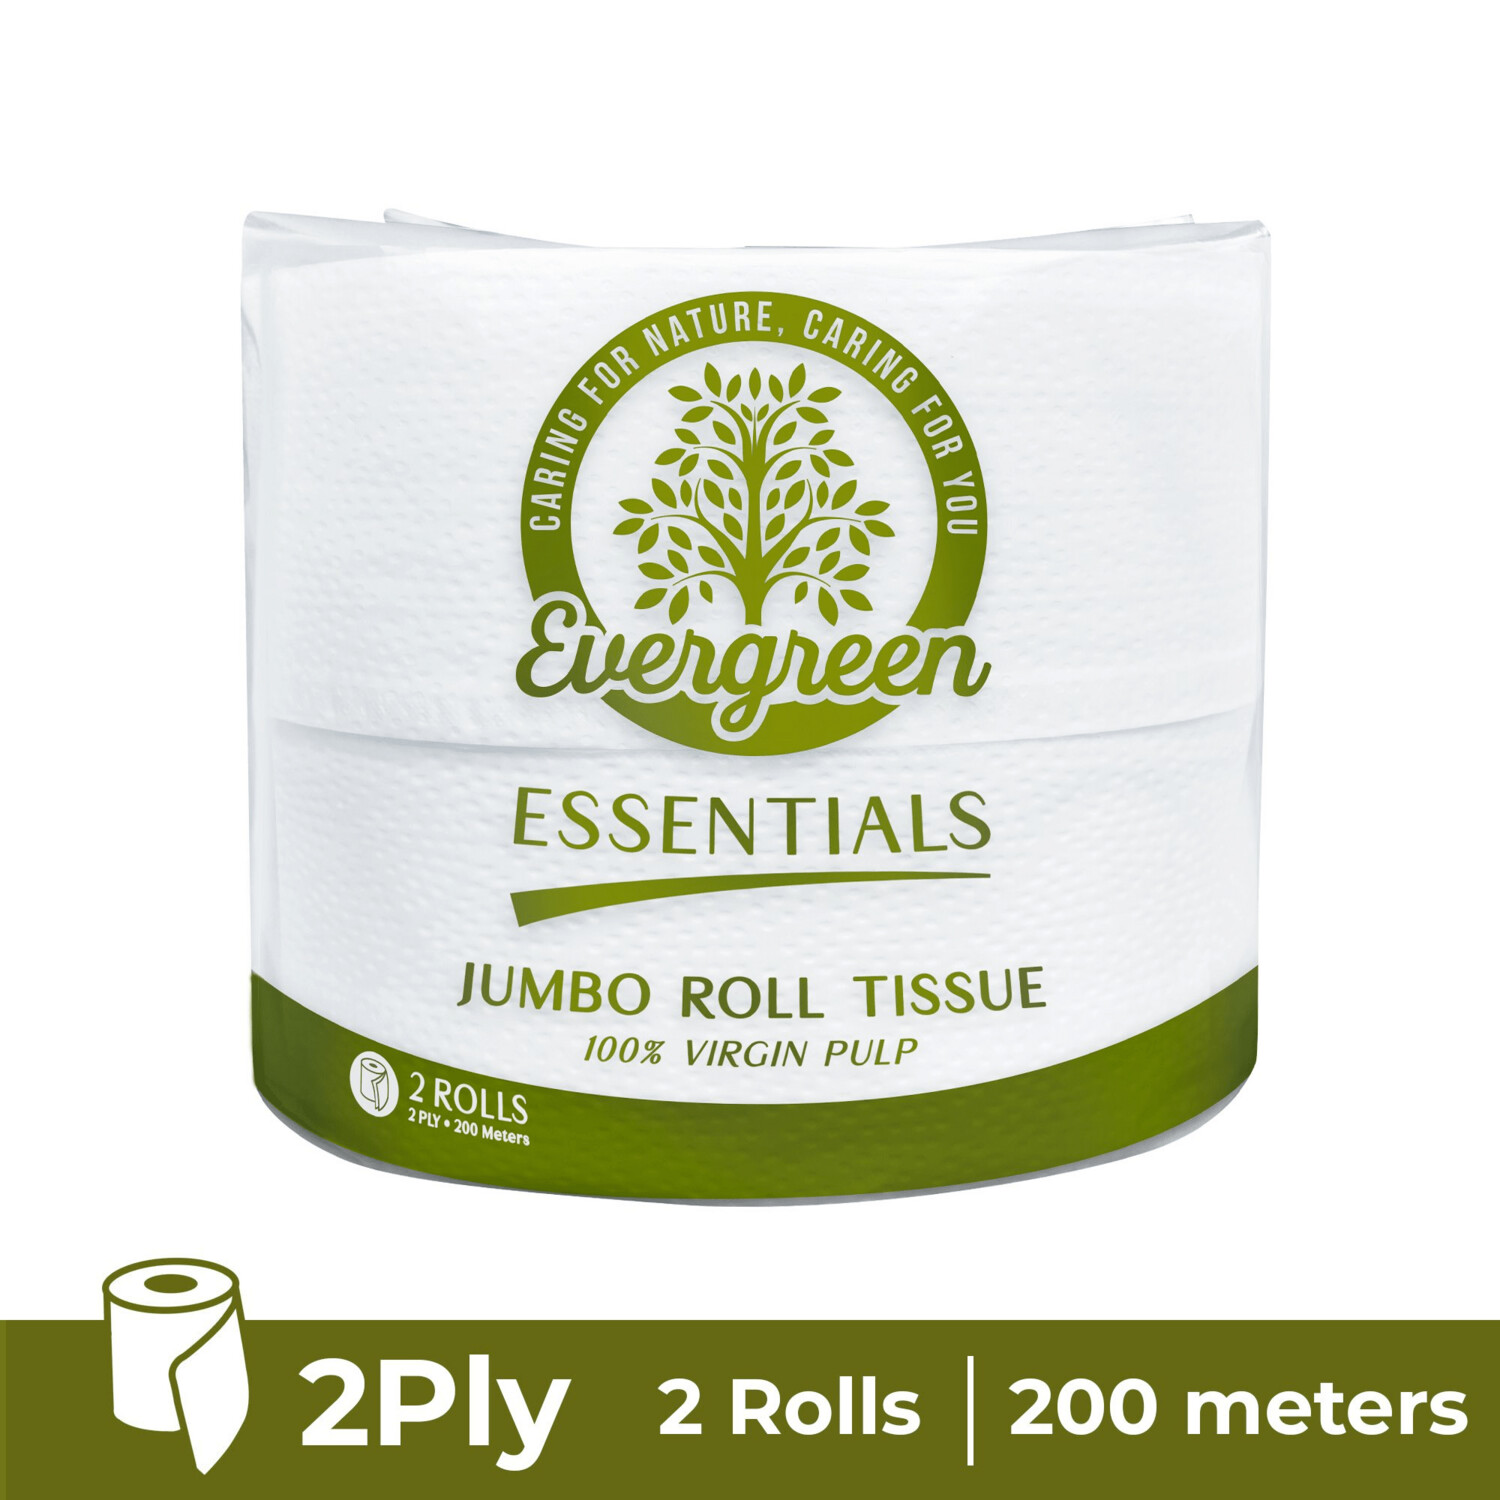 Evergreen Jumbo Roll Tissue 2 Ply 200 Meters x 2 Rolls